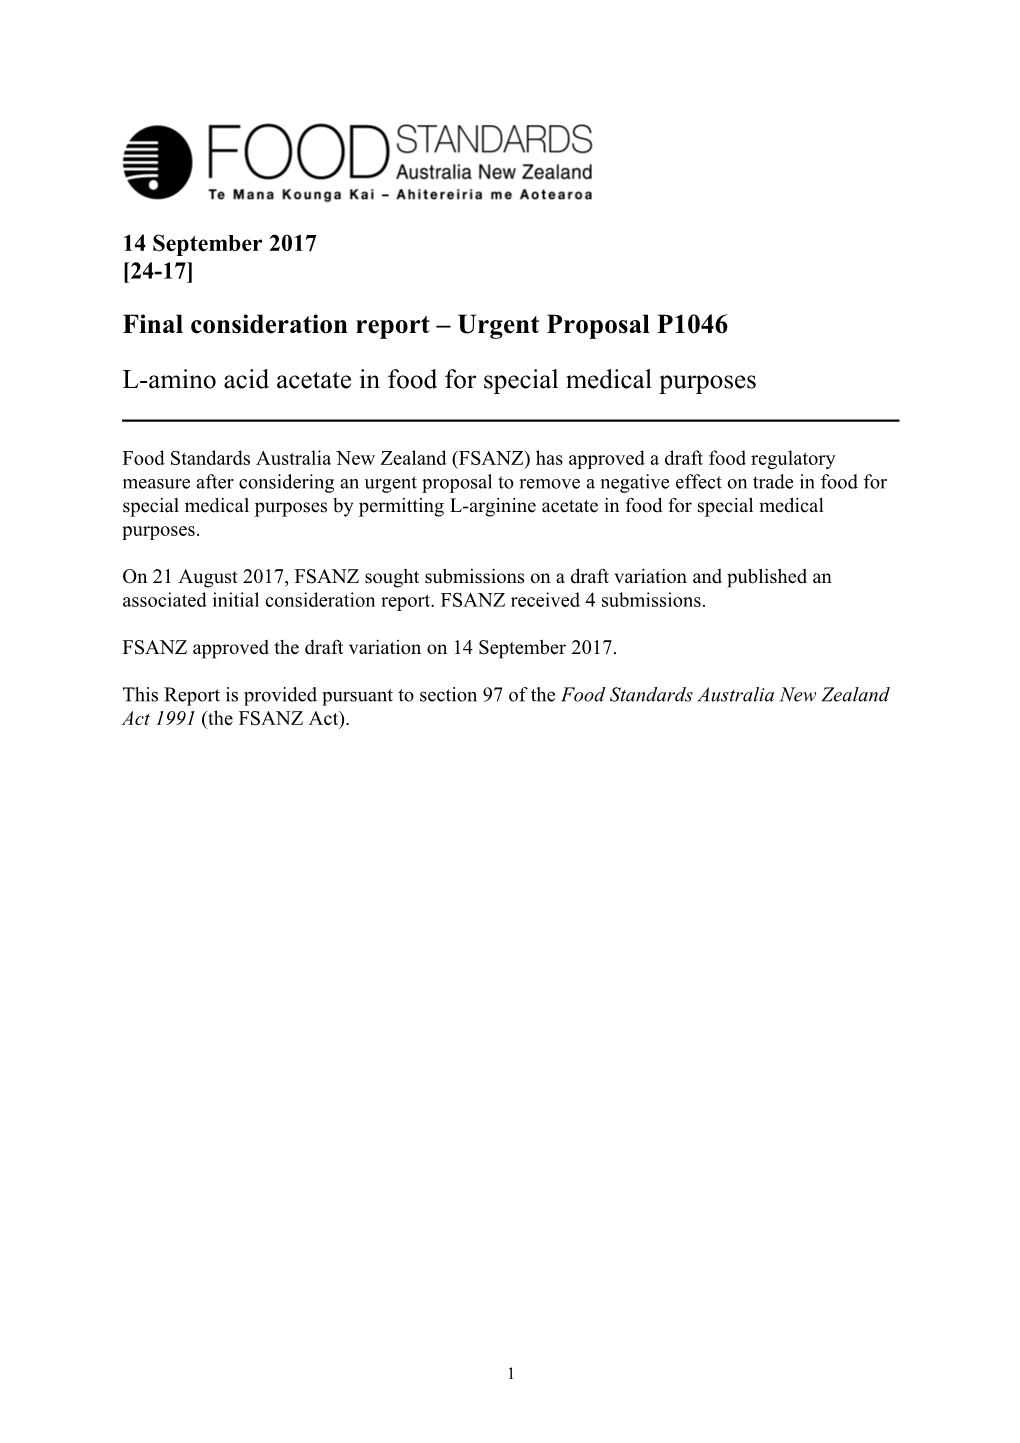 Final Consideration Report Urgent Proposal P1046